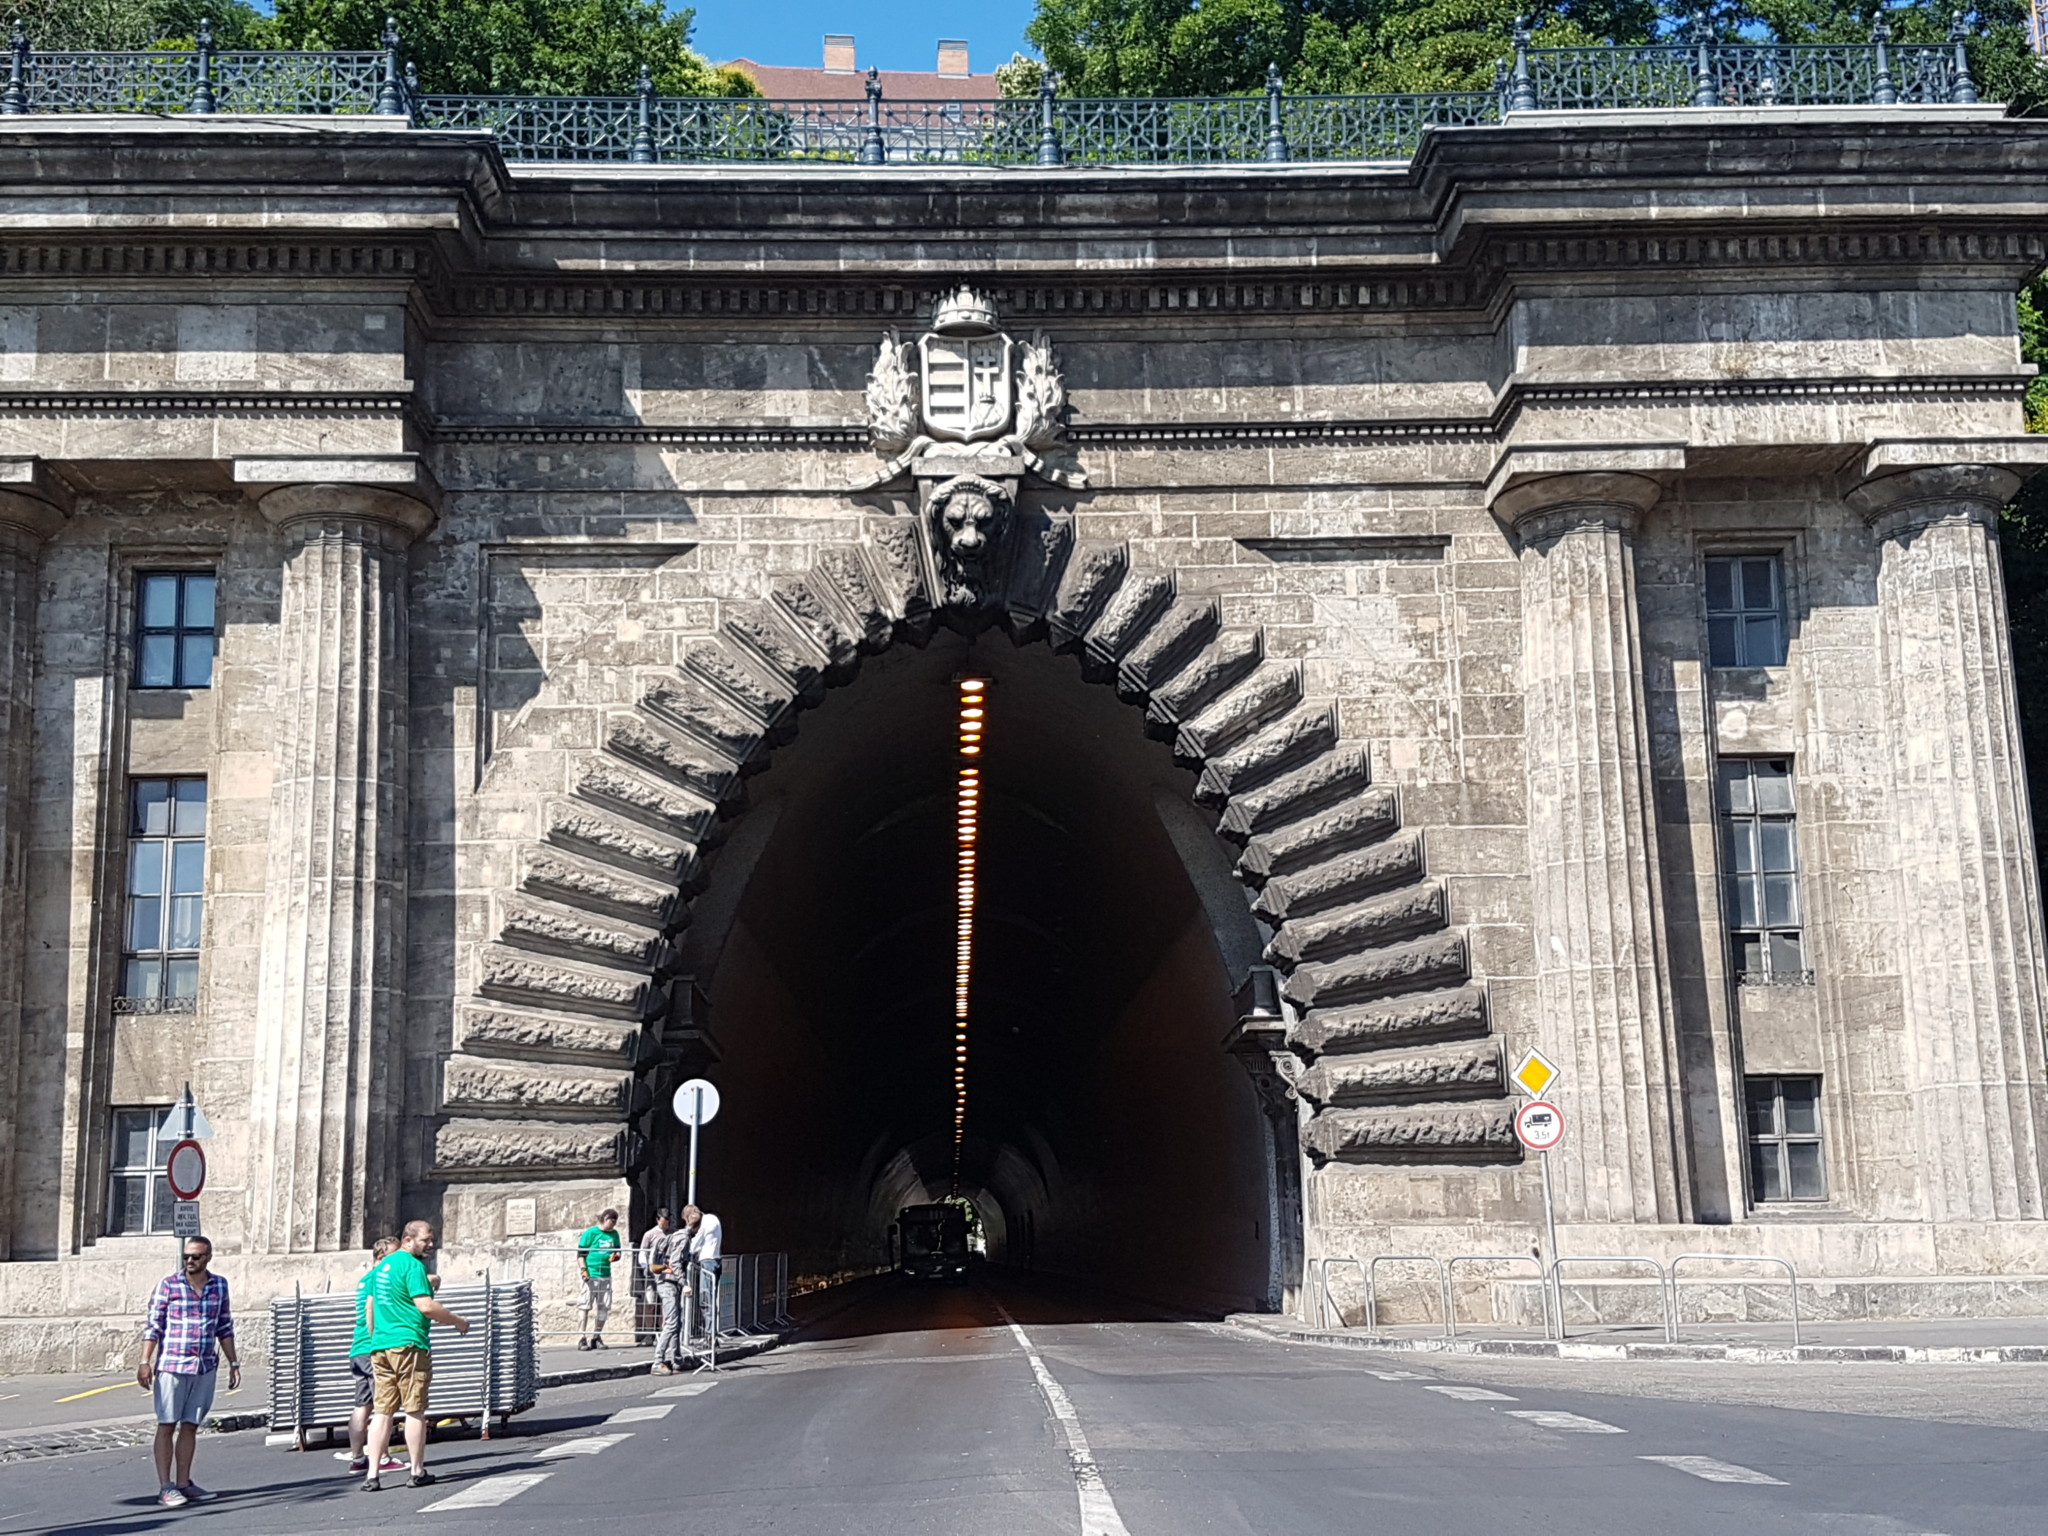 Tunnel the Tour de Hungary Rode Through